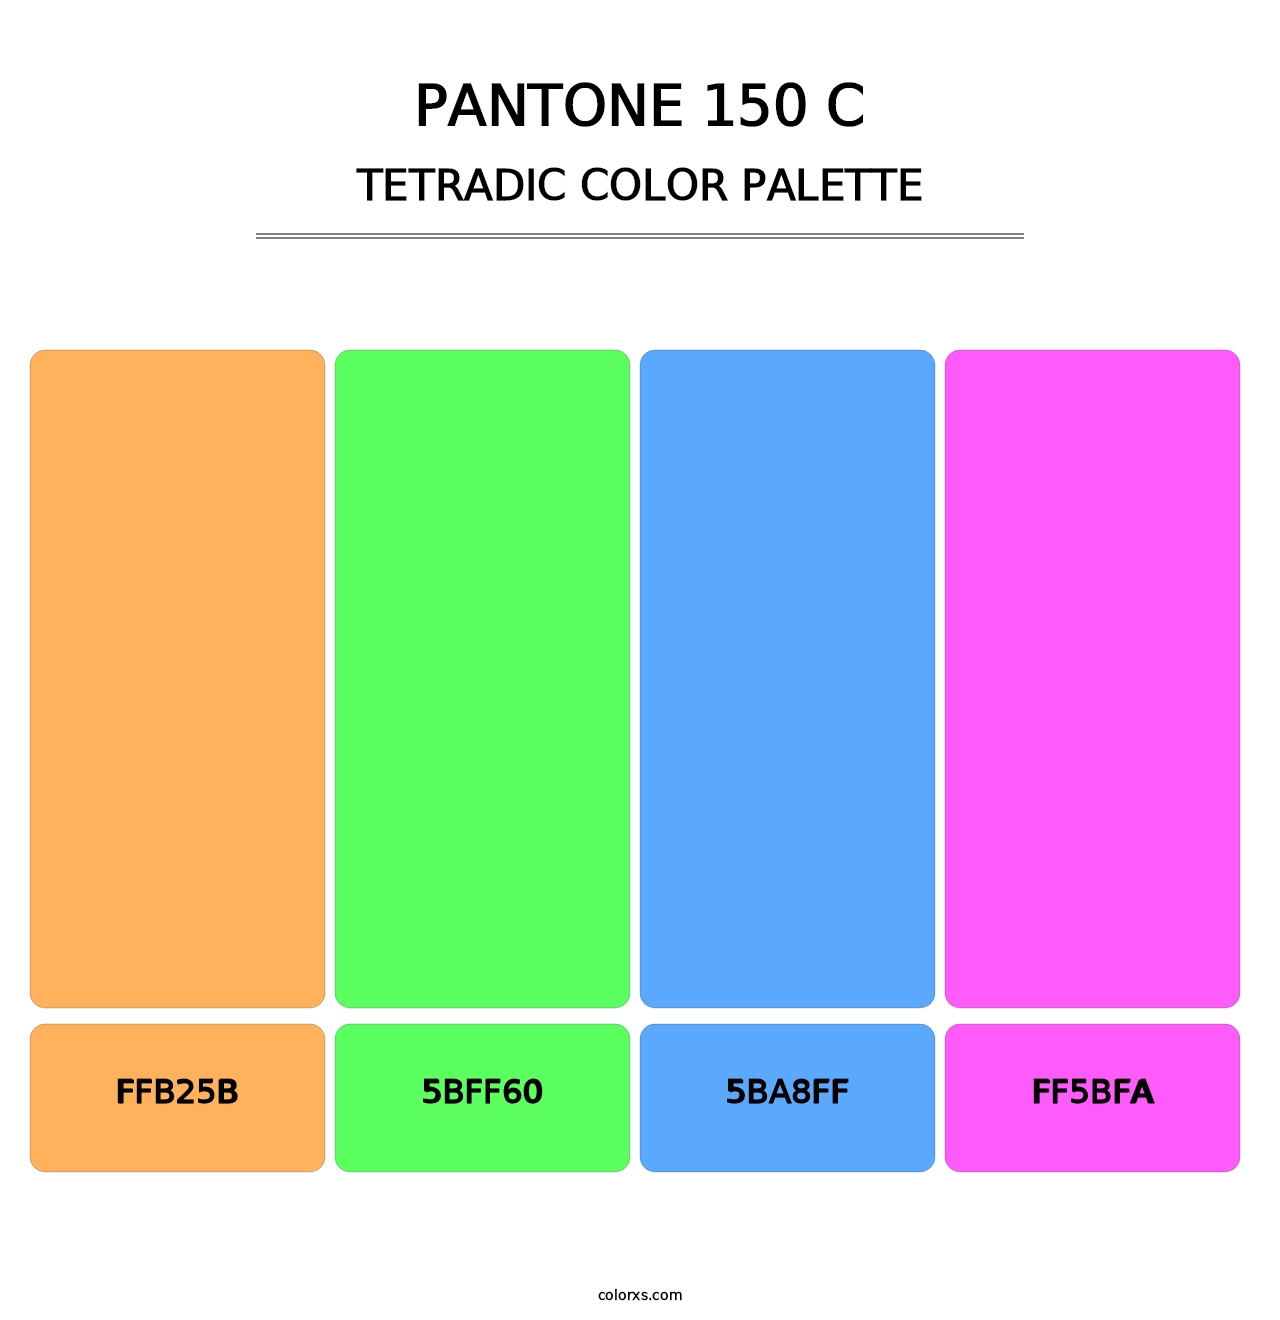 PANTONE 150 C - Tetradic Color Palette